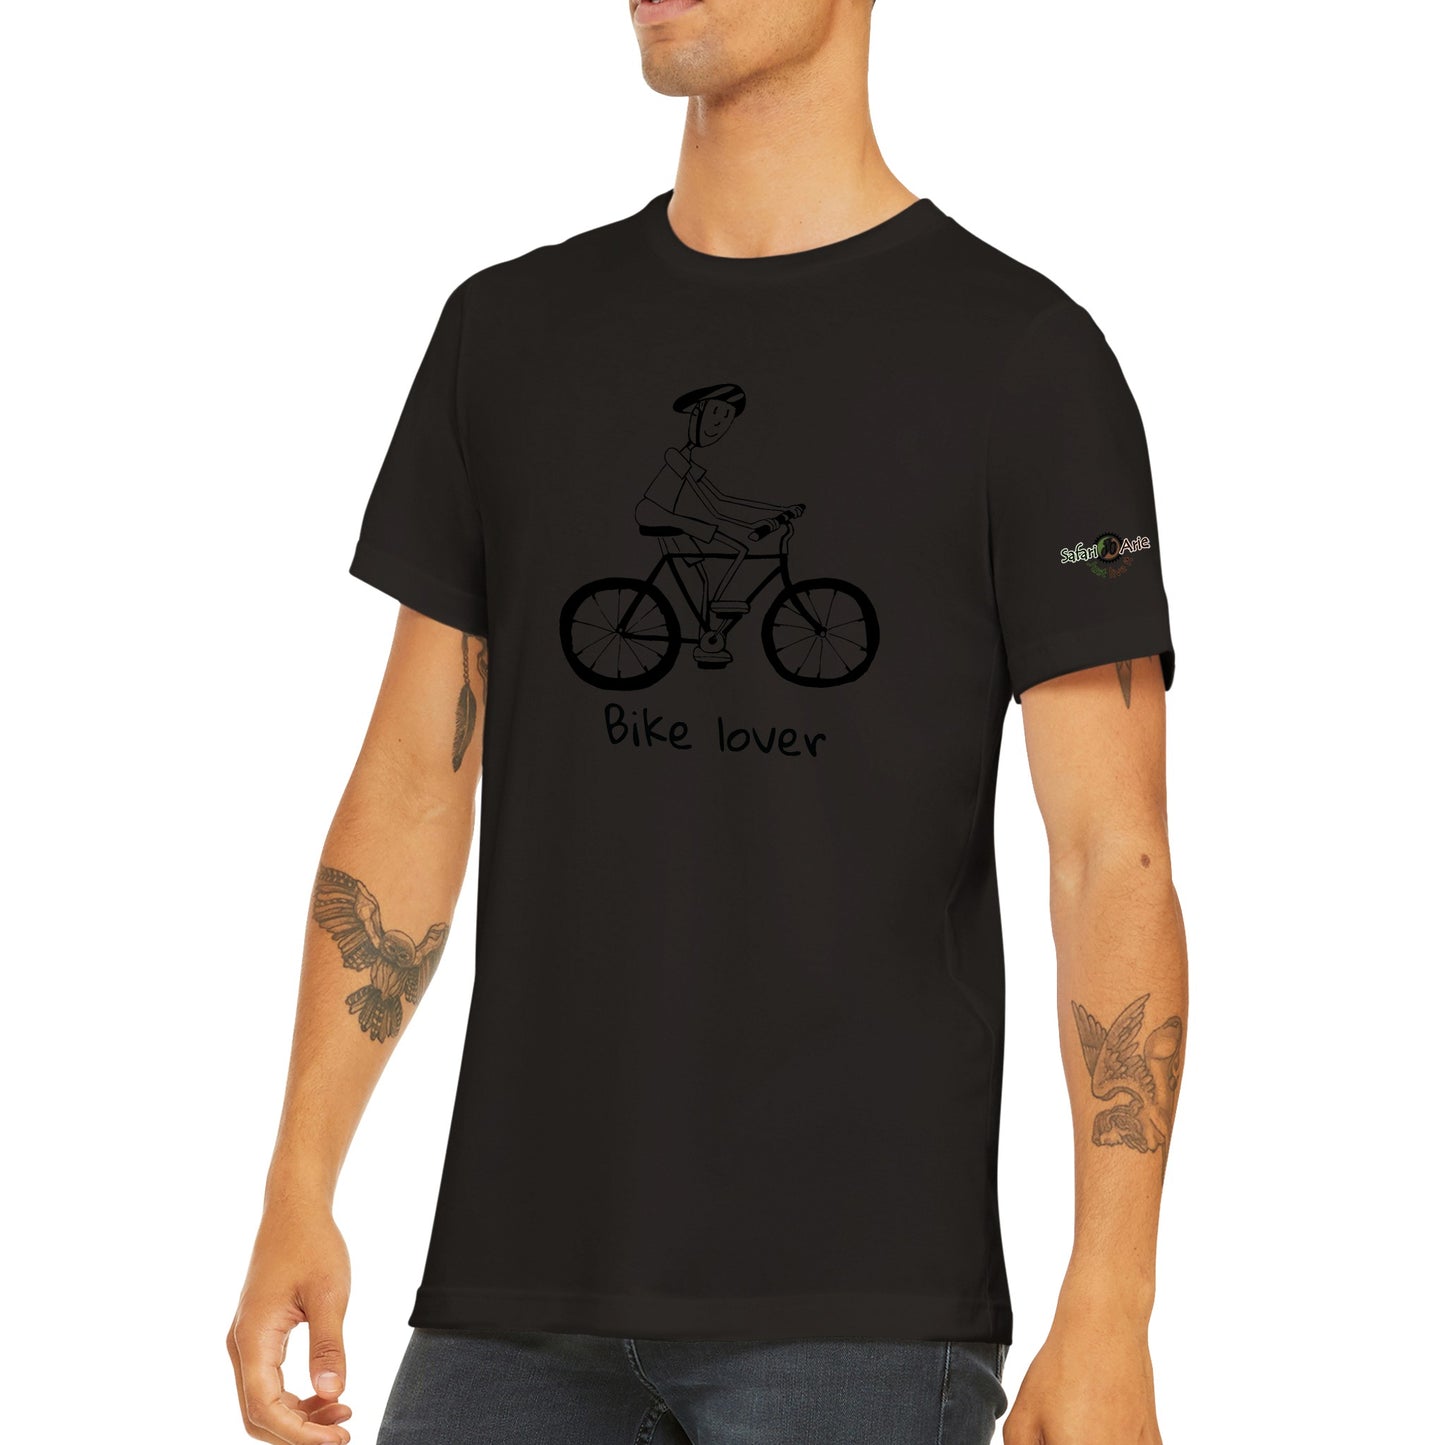 Bike lover mens cartoon t-shirt